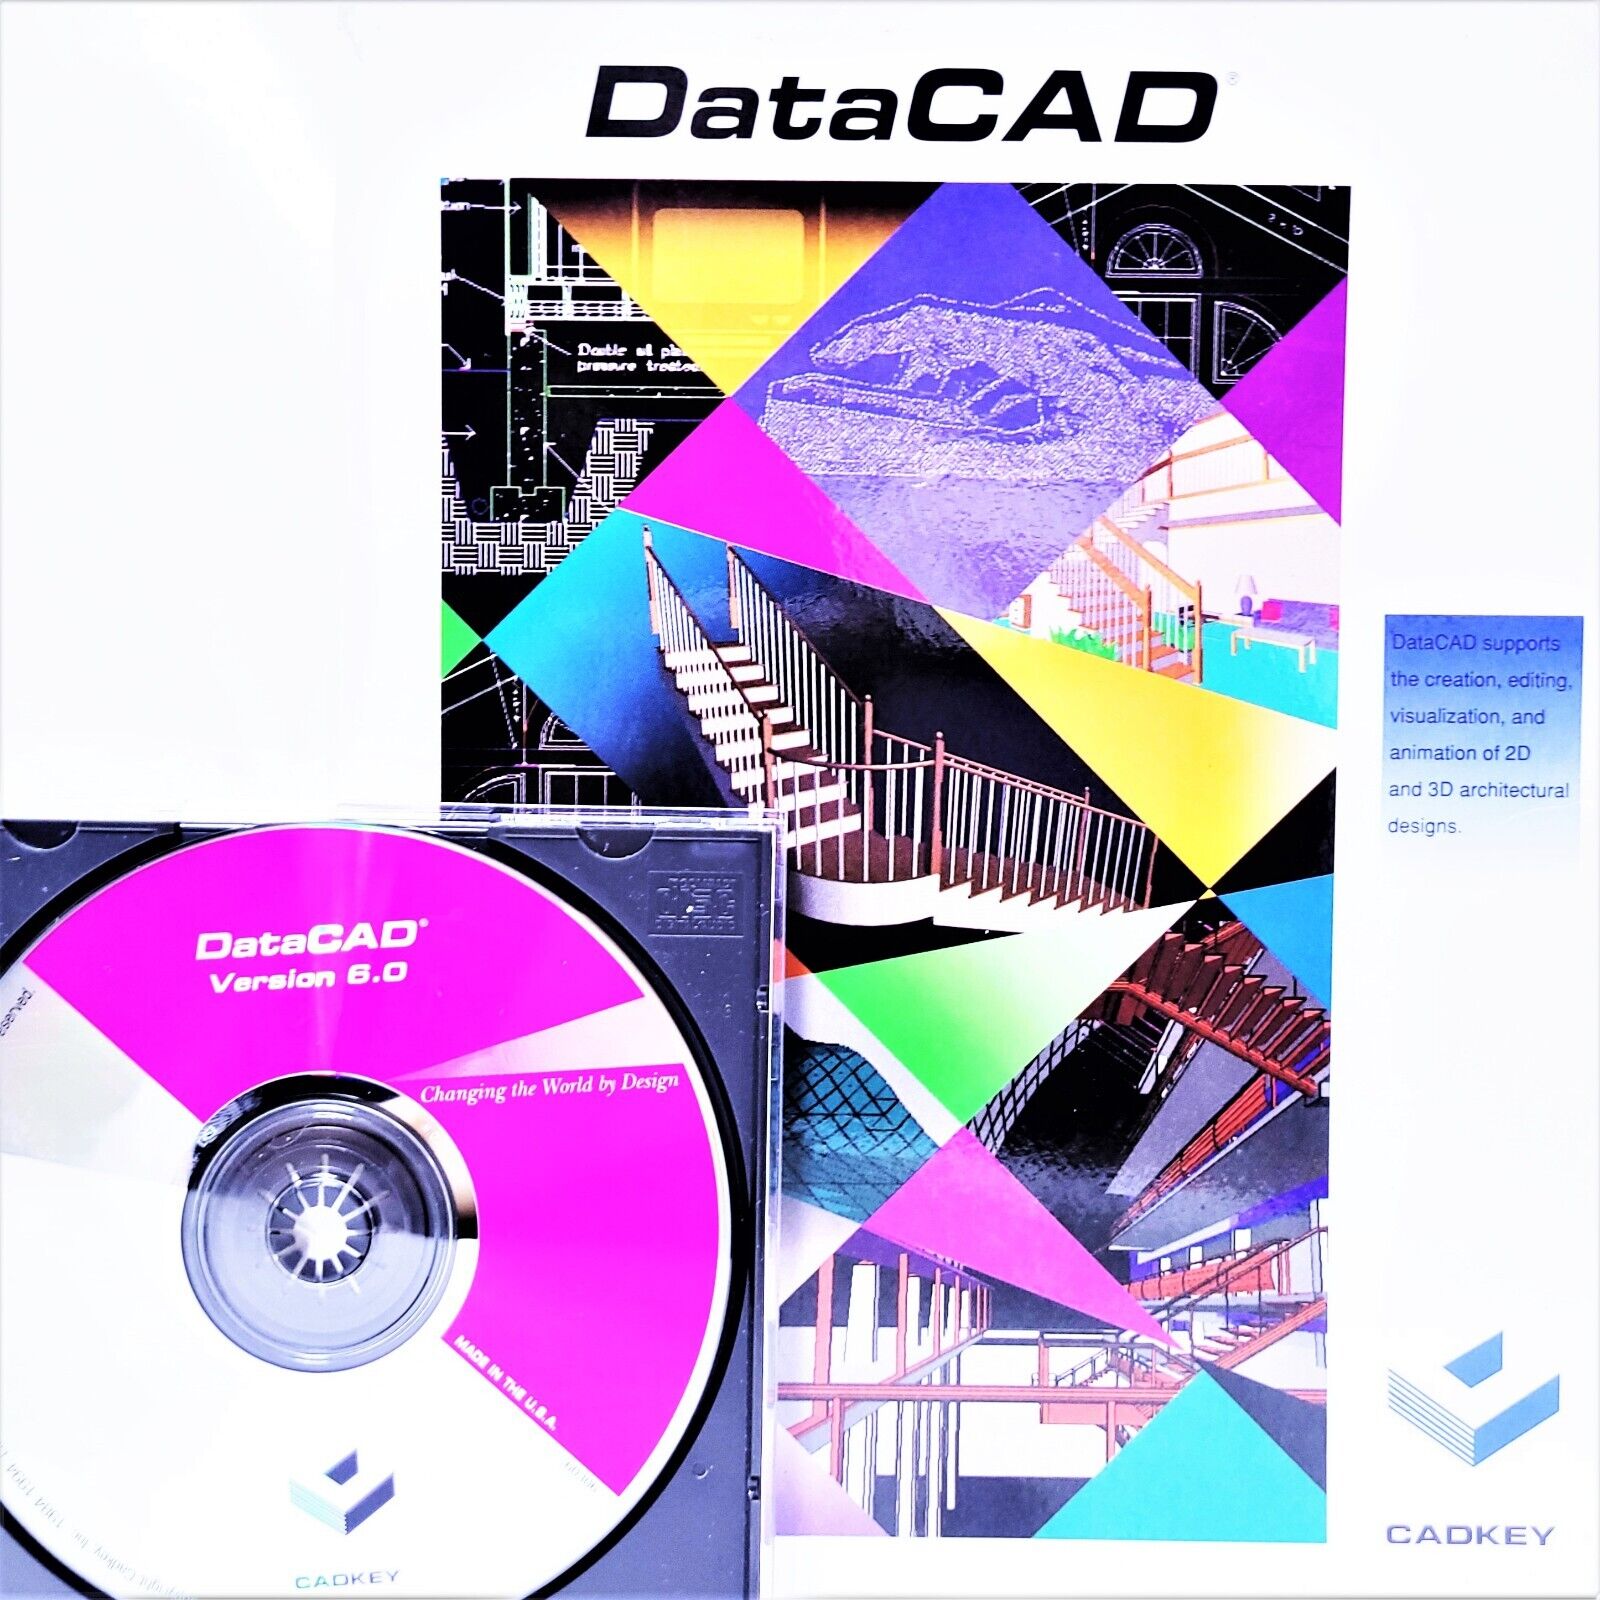 DATACAD Cadkey IBM 1994 Cad *CD* Software Complete Manuals Paperwork Receipt VTG